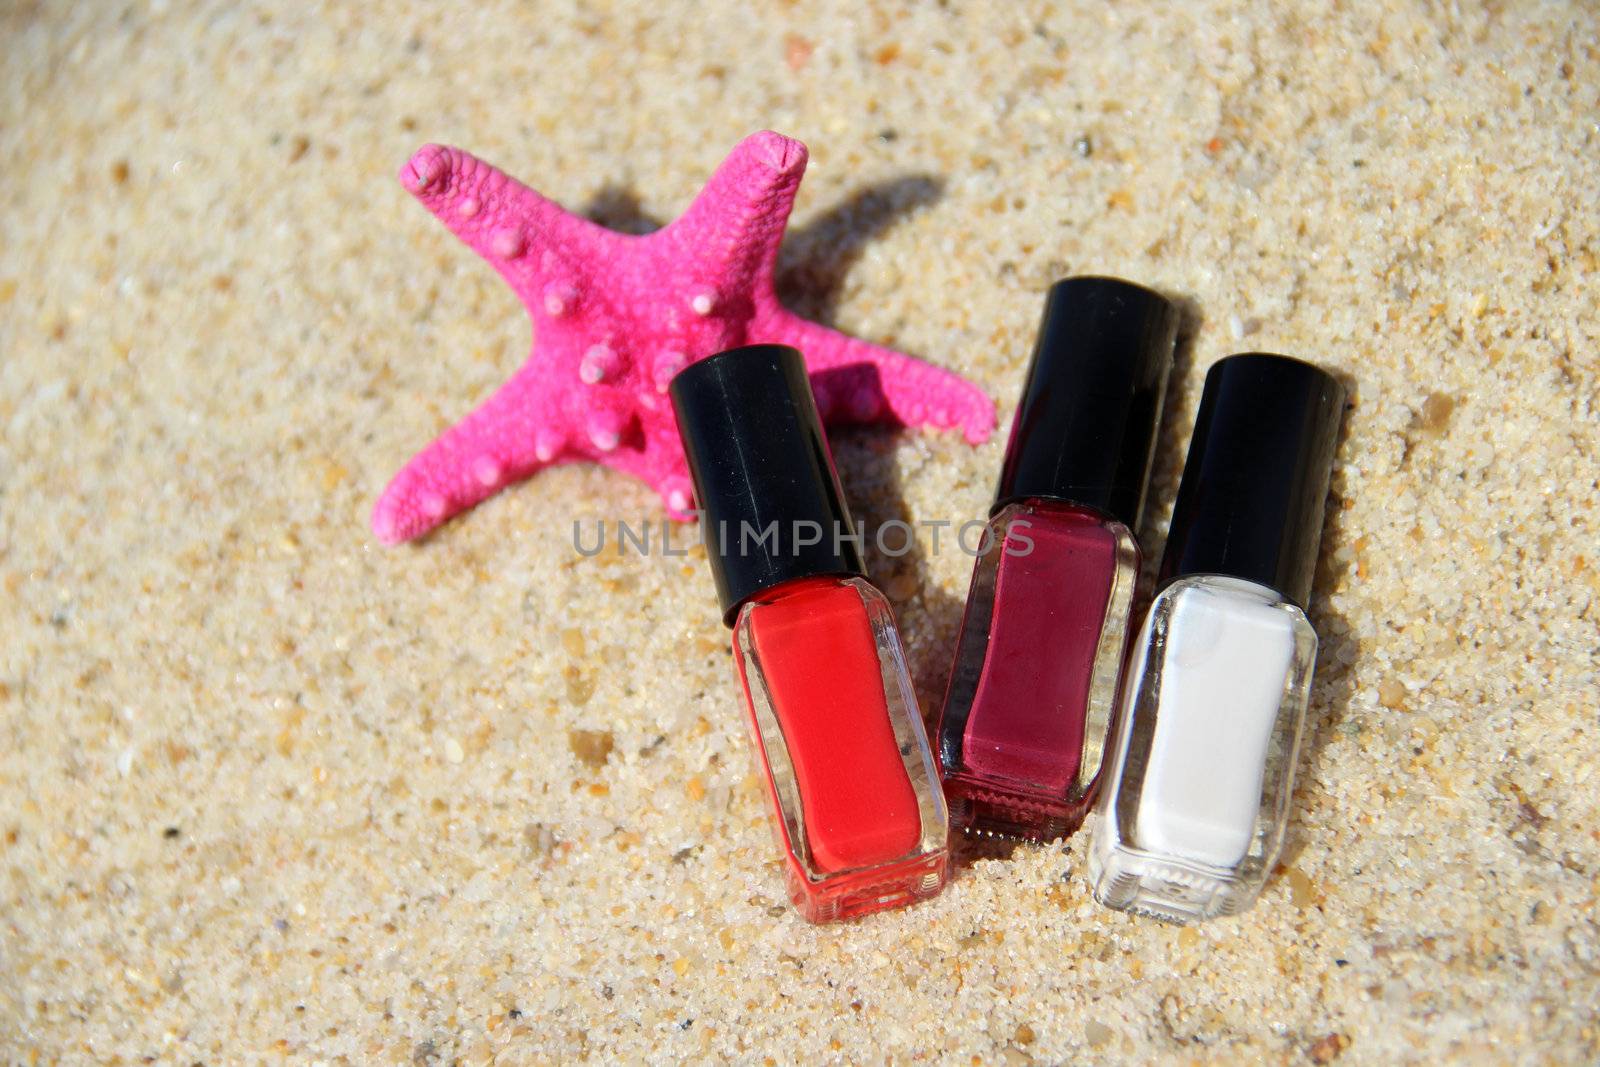 Three nail polish bottle on the beach and pink starfish;